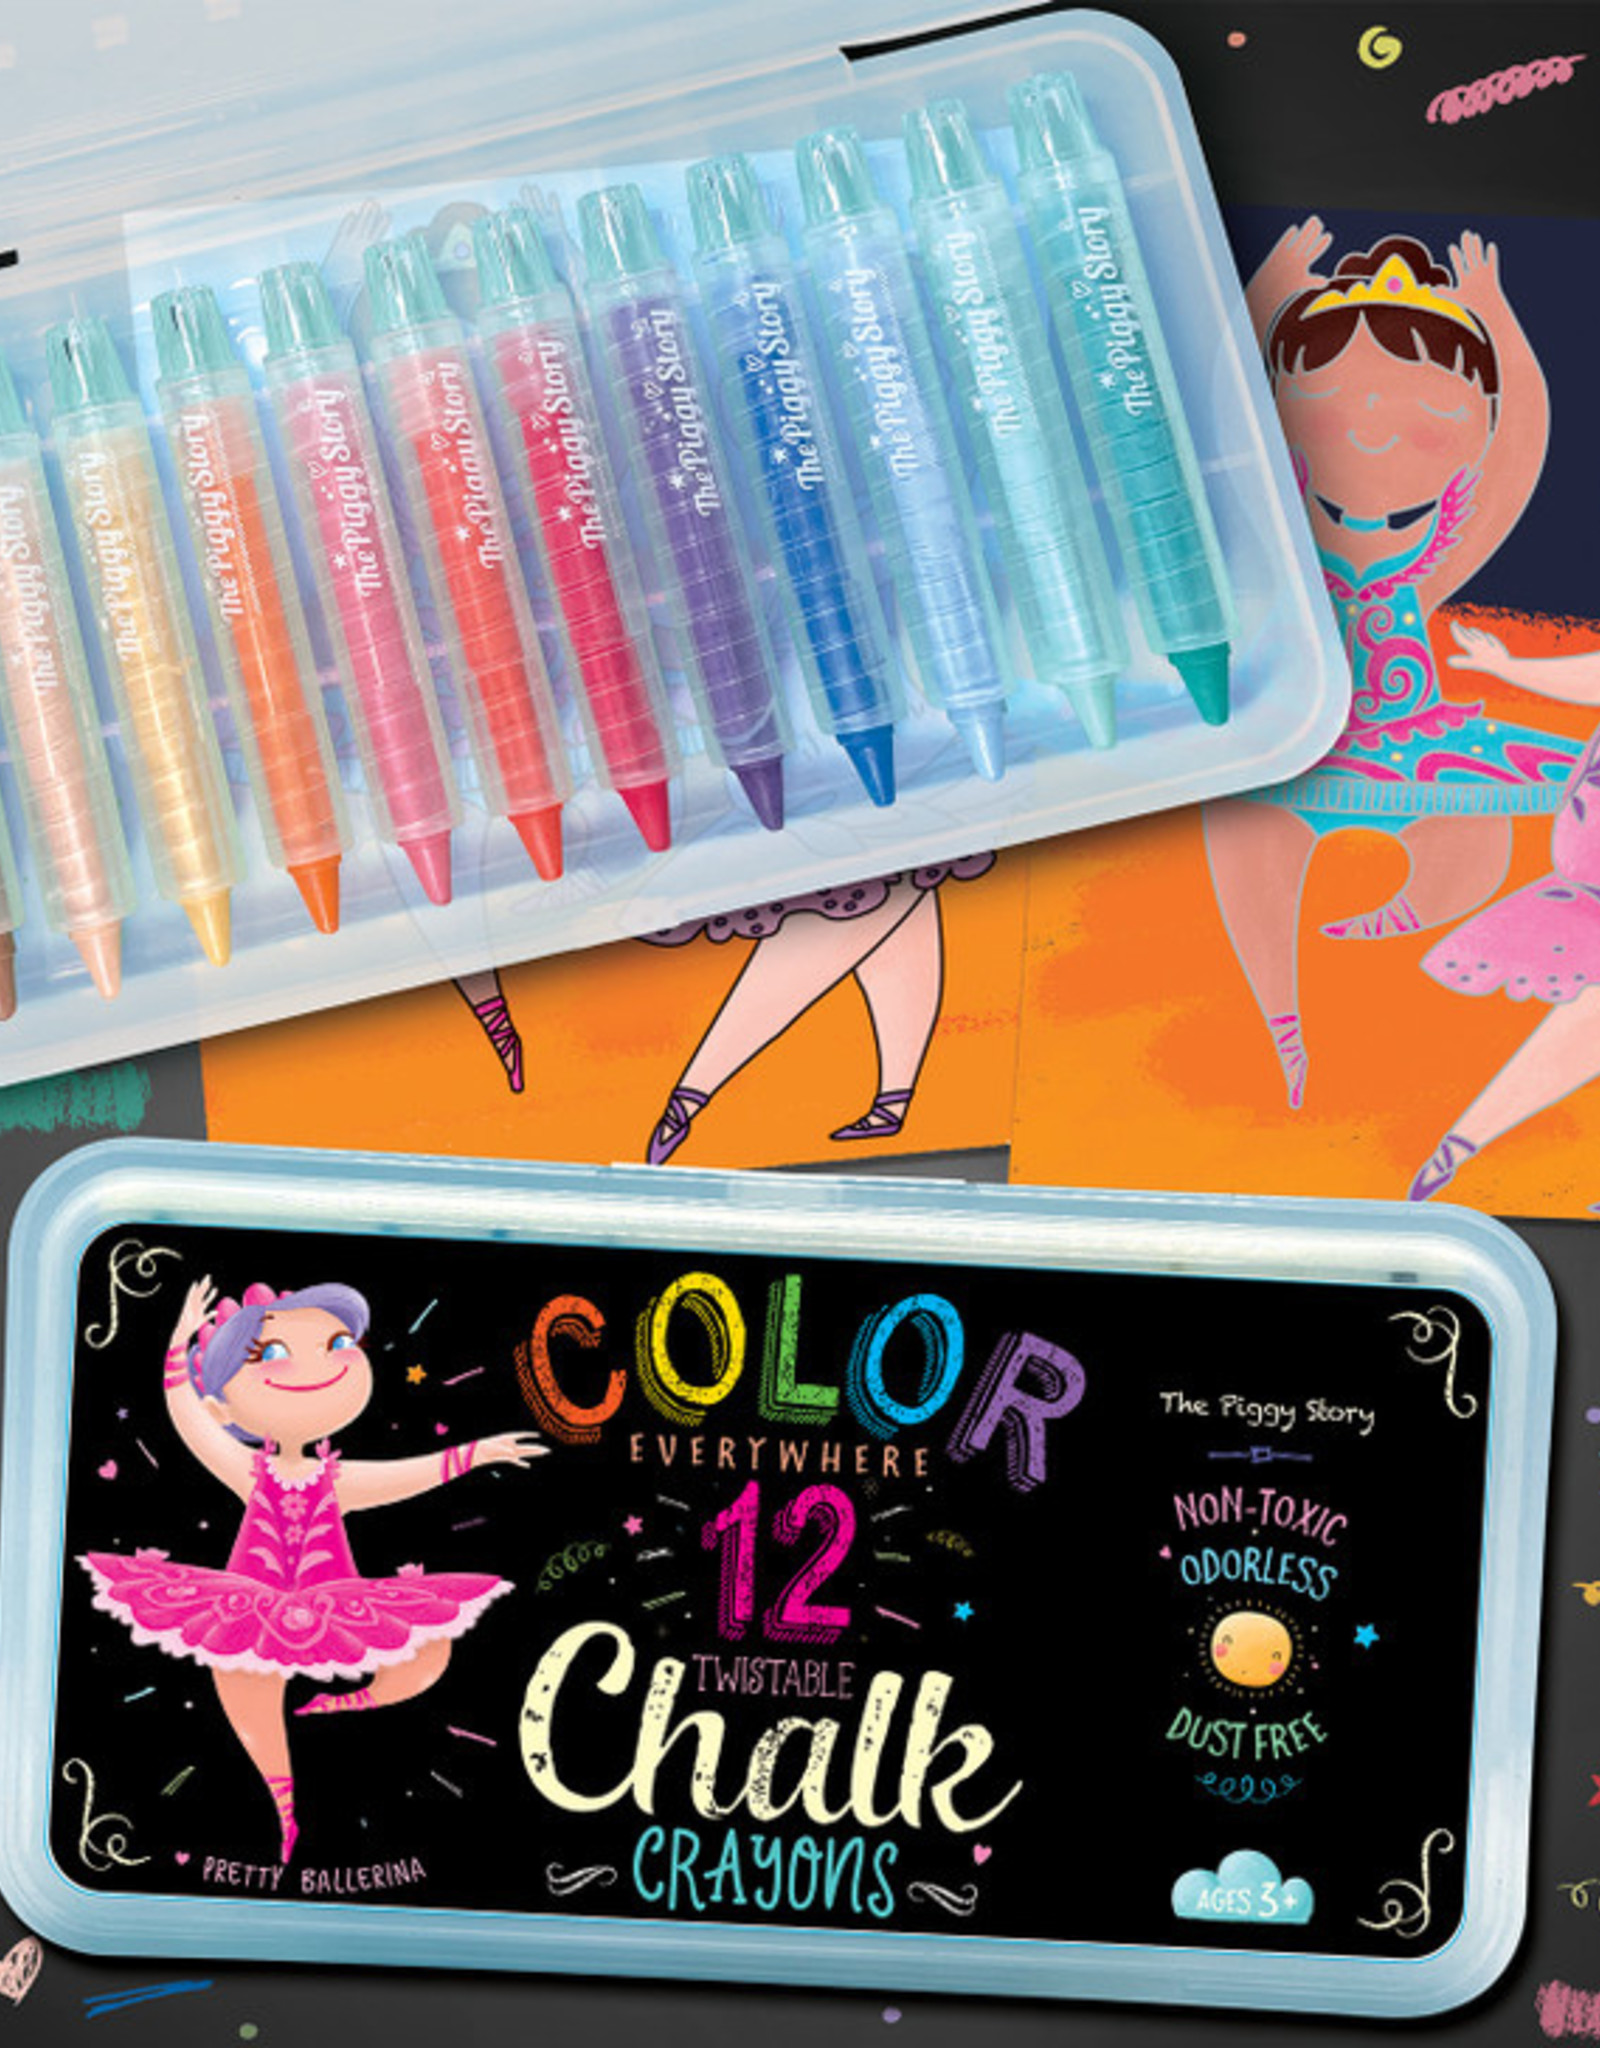 Dry Erase Twistable Gel Crayons (Pretty Ballerinas) - The Piggy Story